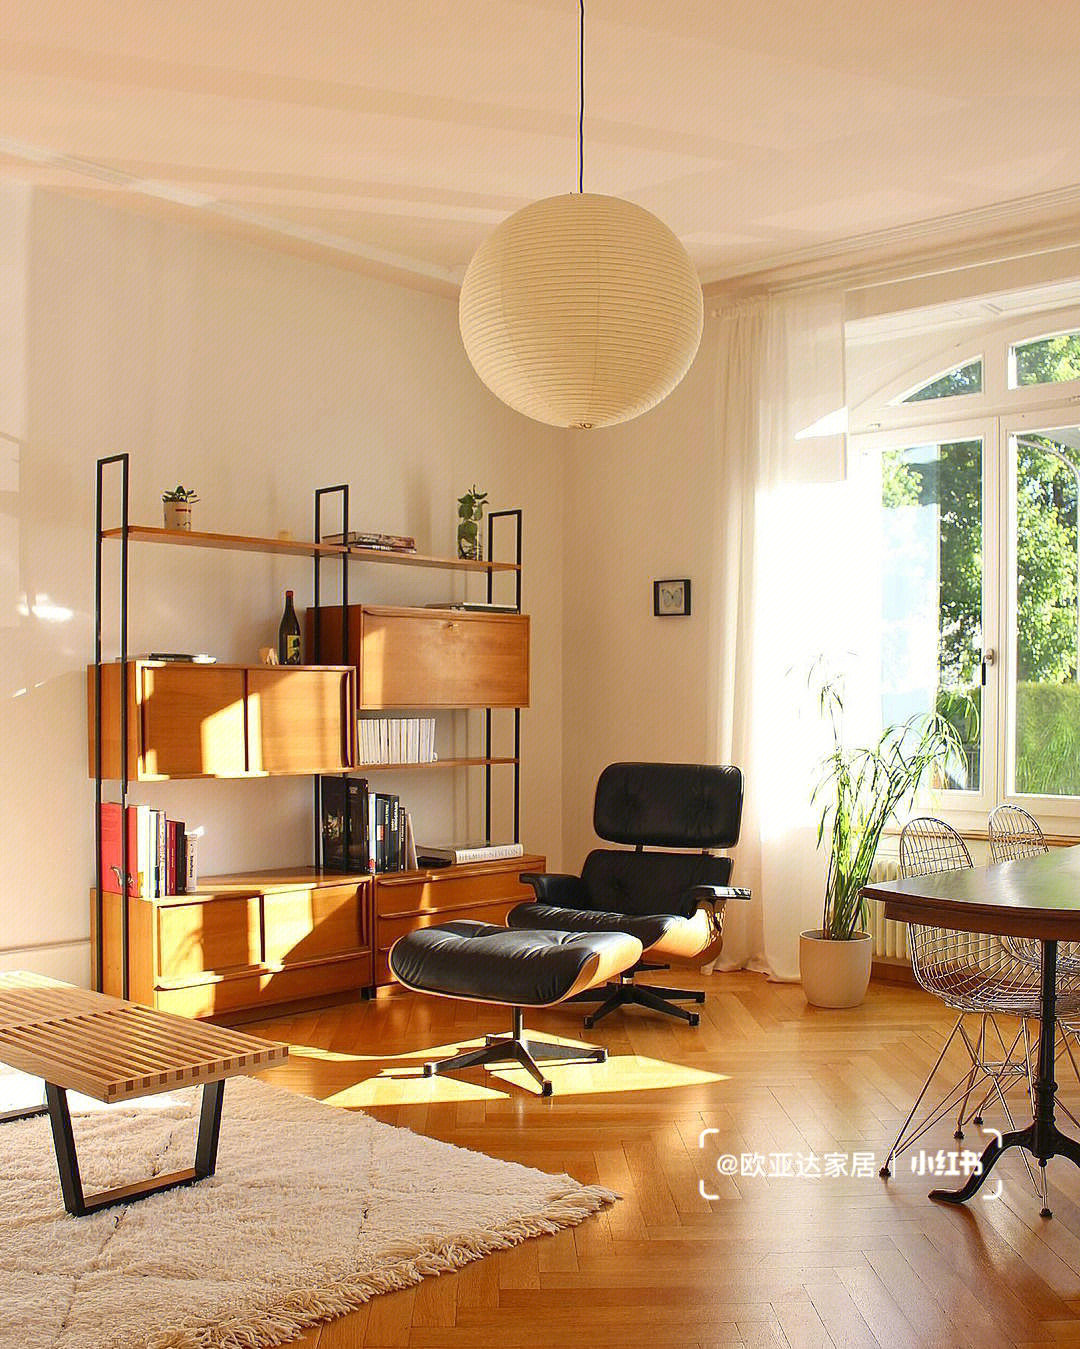 eames lounge chair伊姆斯躺椅设计于1956年,一度被认为是家居界奢侈